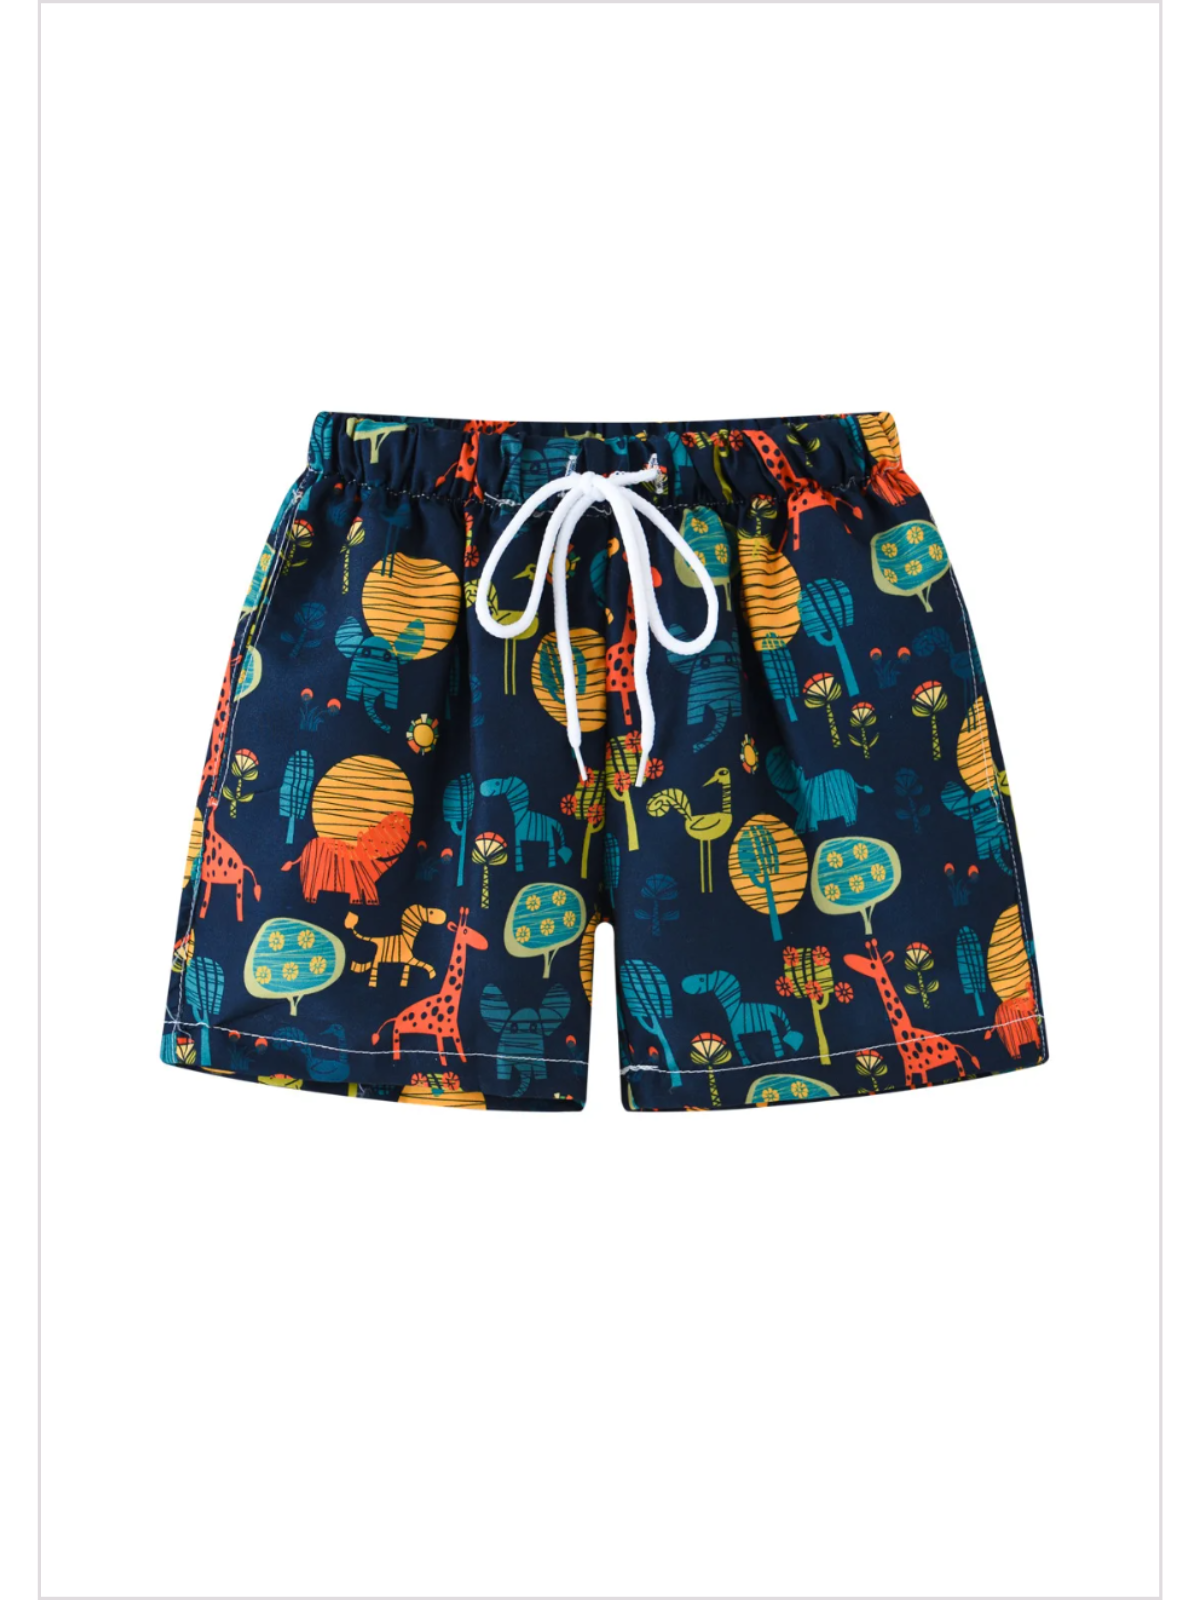 Boys Multicolor Swim Trunks | Mia Belle Girls Summer Outfits